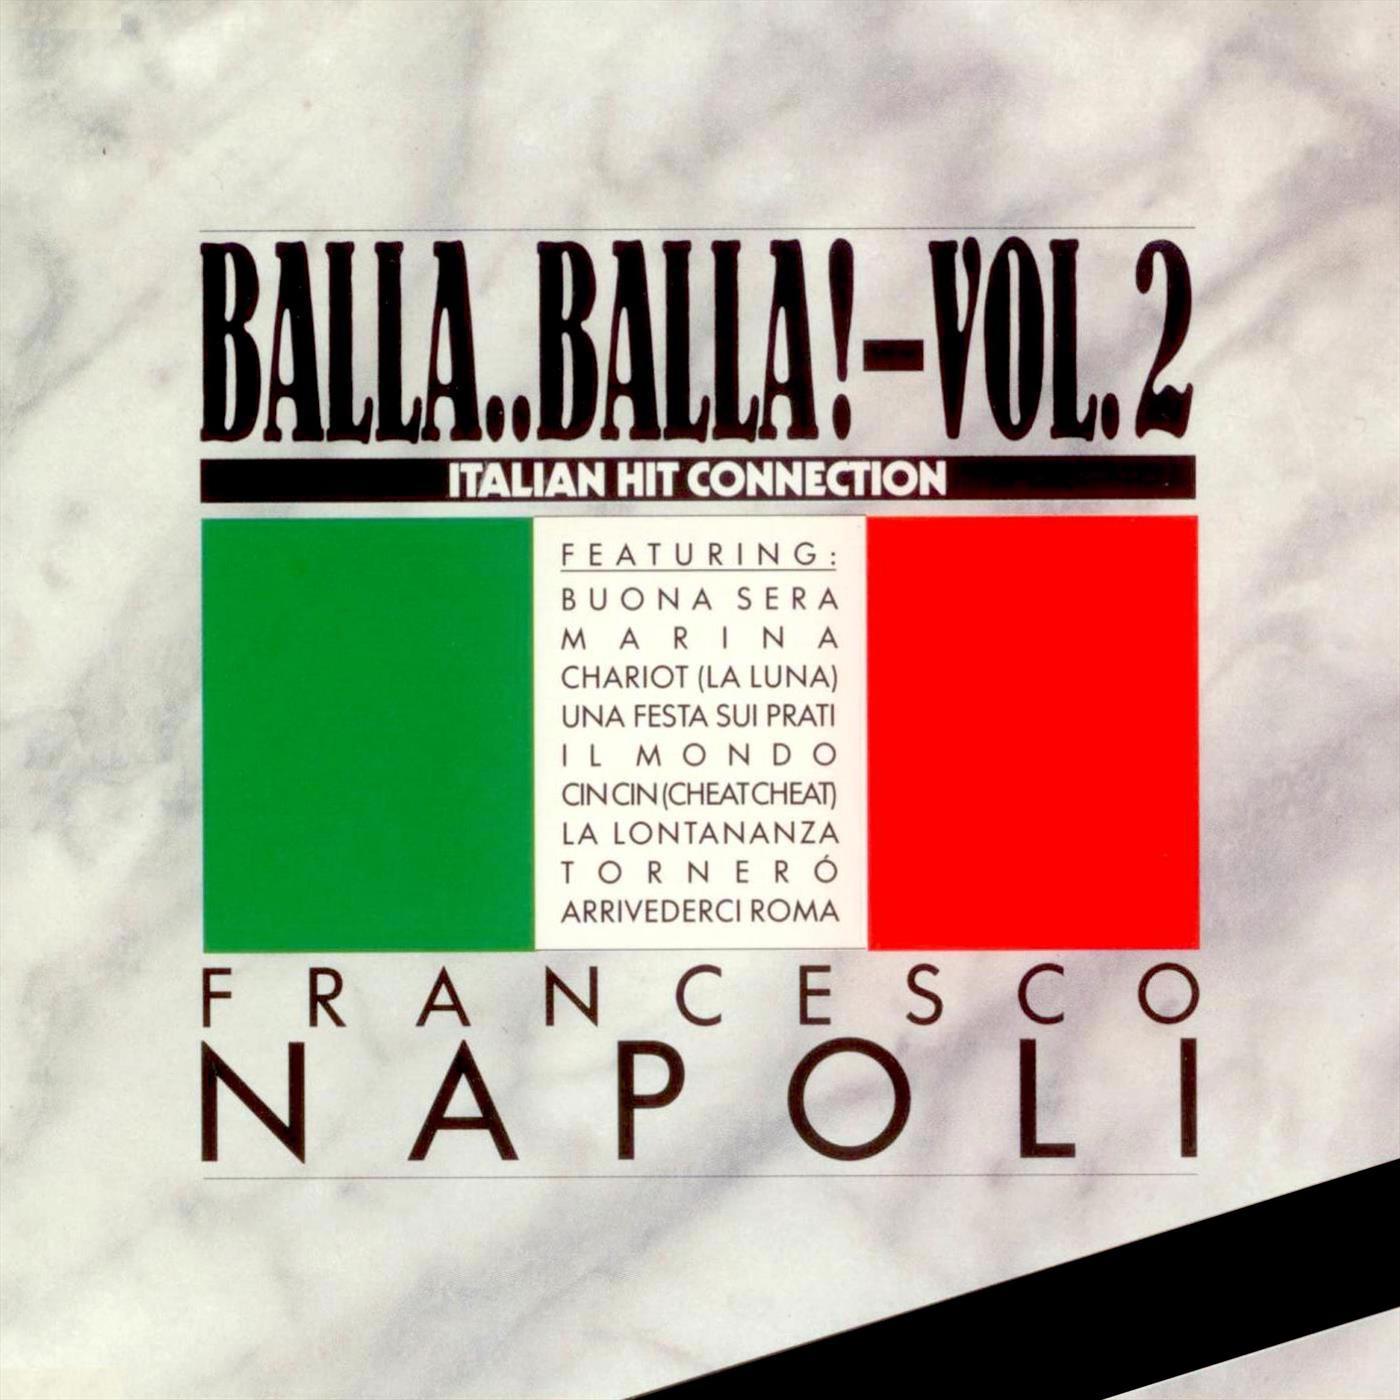 Balla..Balla! Vol.2 Italian Hit Connection